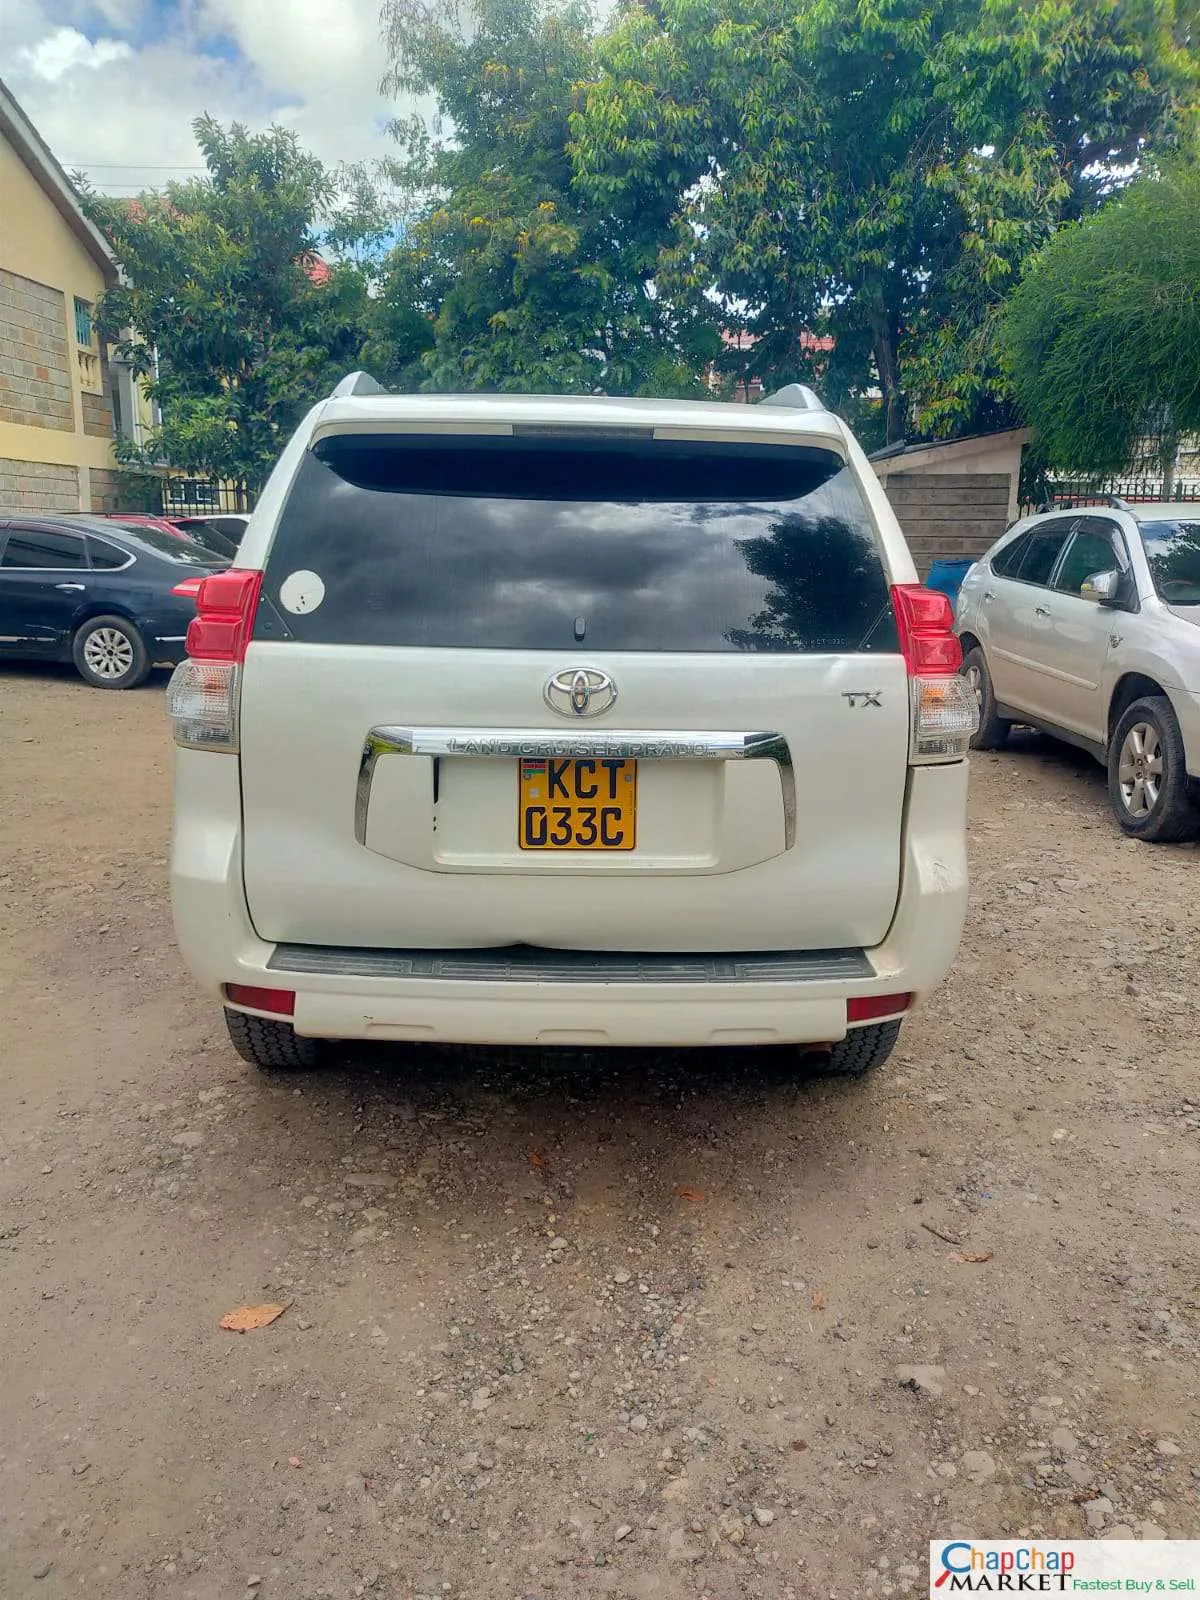 Toyota Prado J150 Kenya QUICKEST SALE 🔥 You Pay 40% Deposit Trade in OK EXCLUSIVE Toyota Prado for sale in kenya hire purchase installments